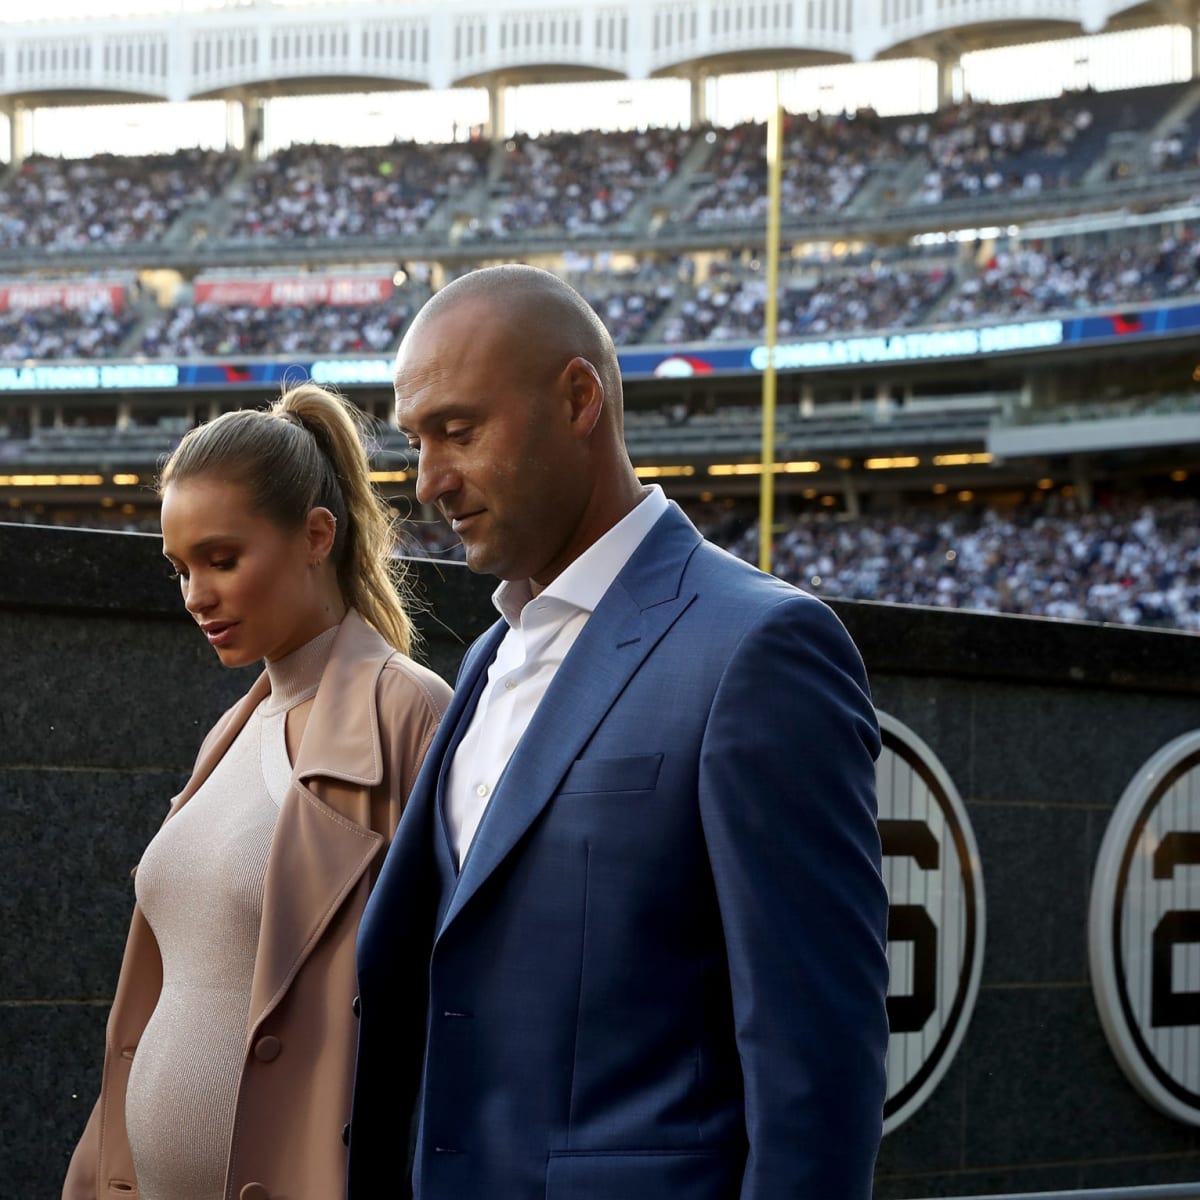 Retired New York Yankees shortstop Derek Jeter and his wife Hannah